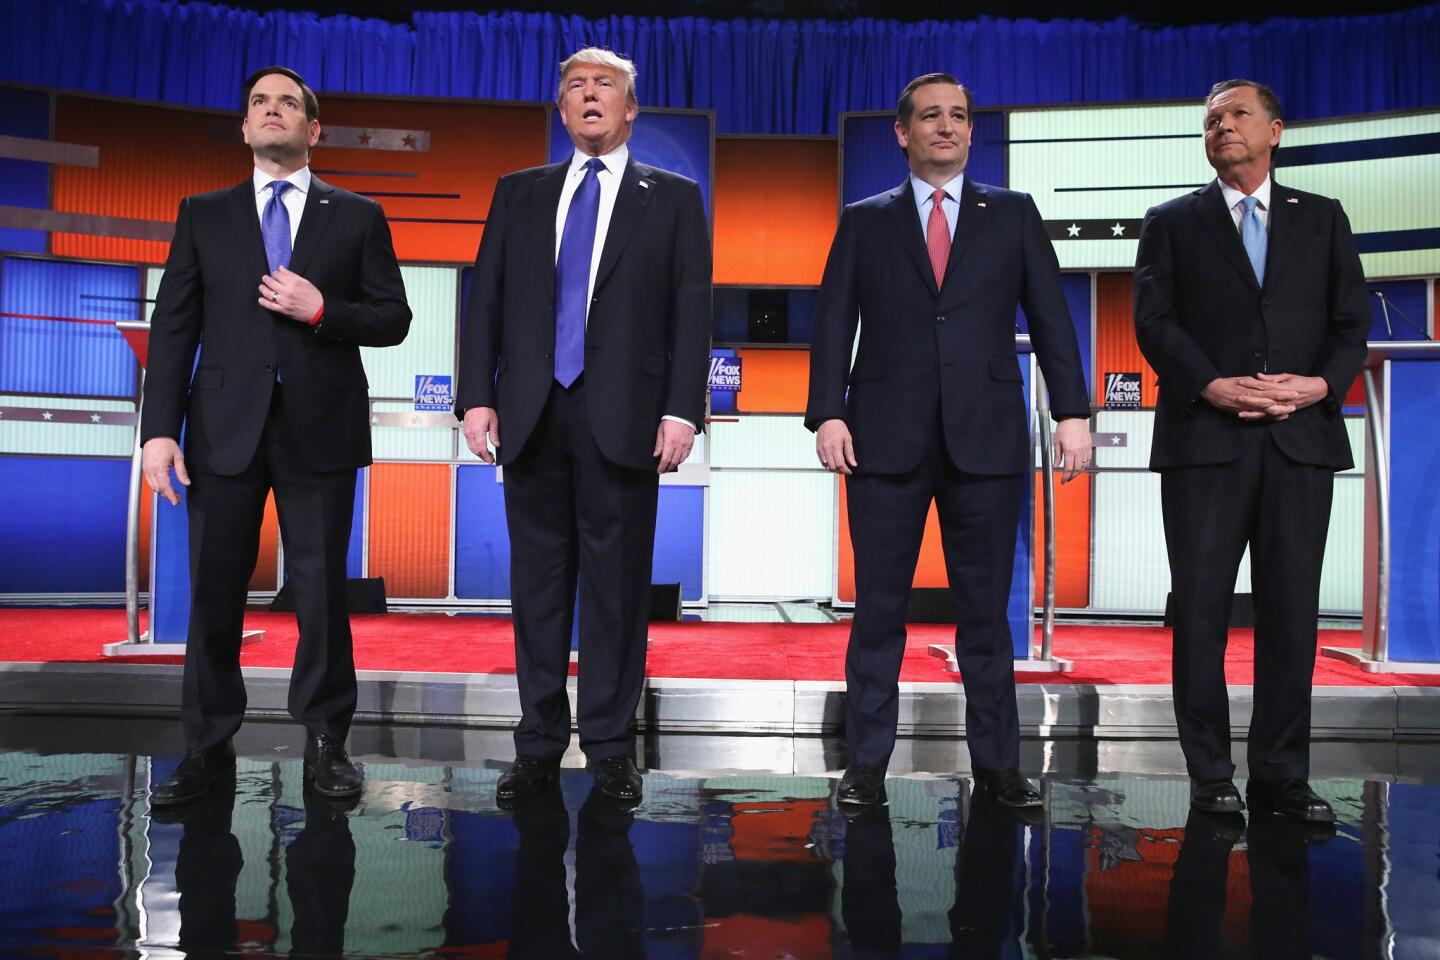 Marco Rubio, Donald Trump, Ted Cruz, John Kasich